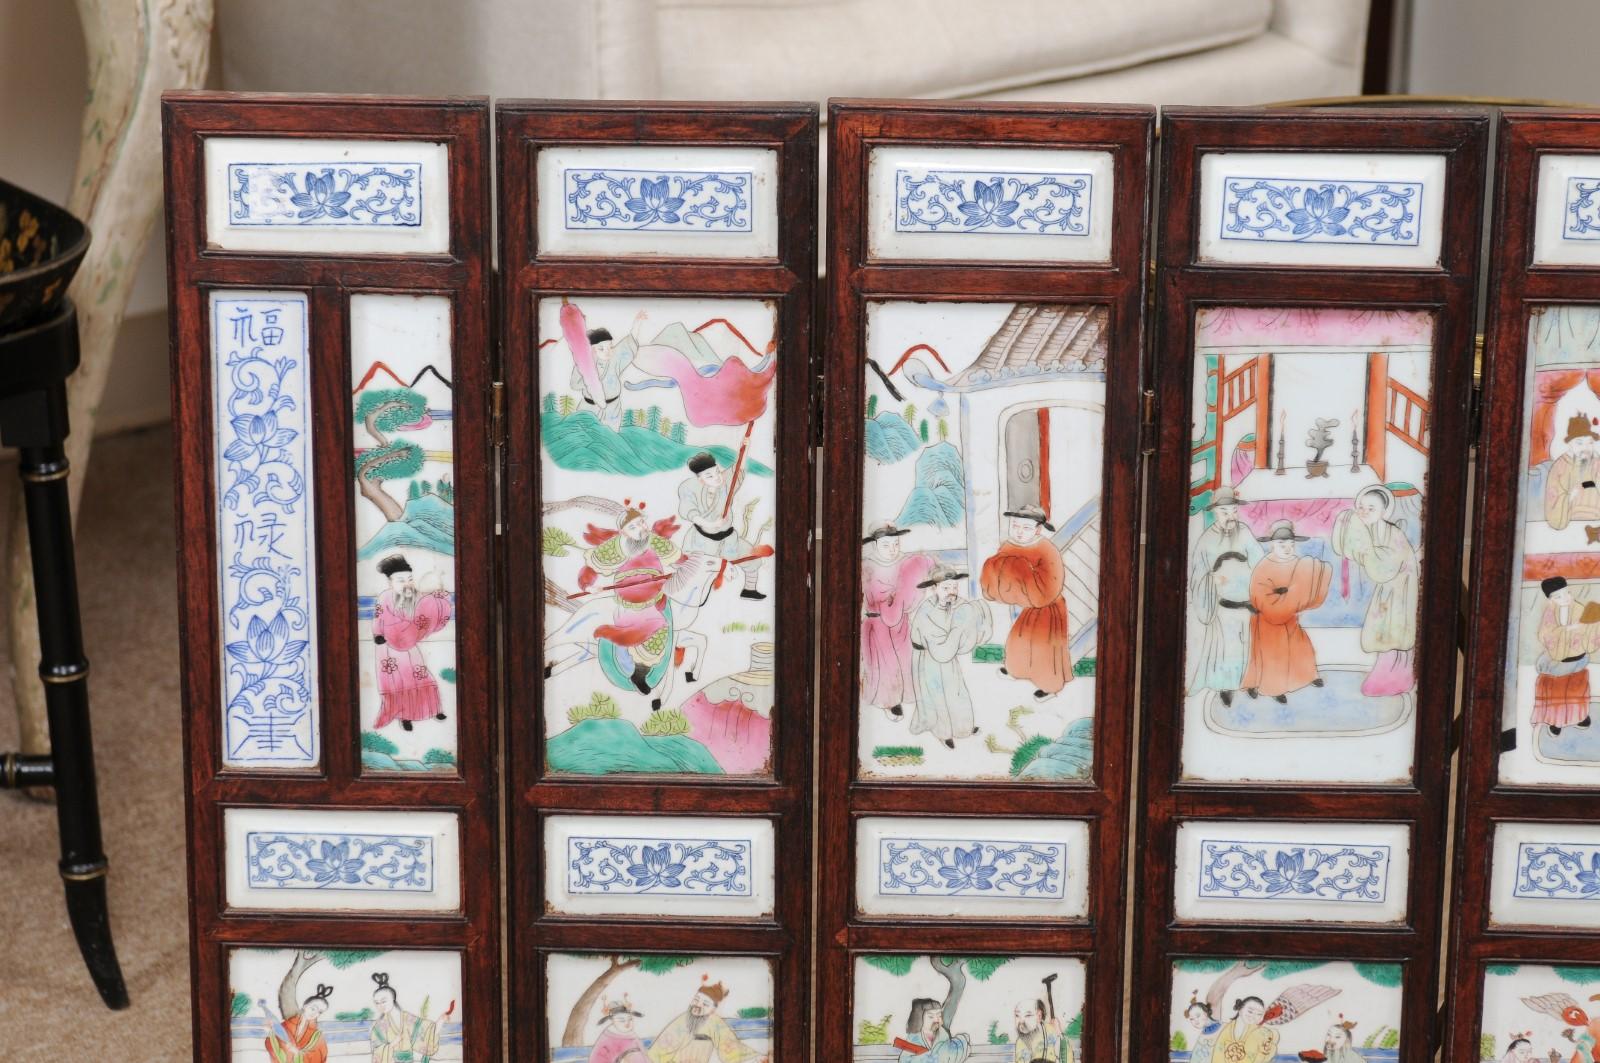 8-Panel Framed Porcelain Tile Screen, 19th Century Chinese Export For Sale 8